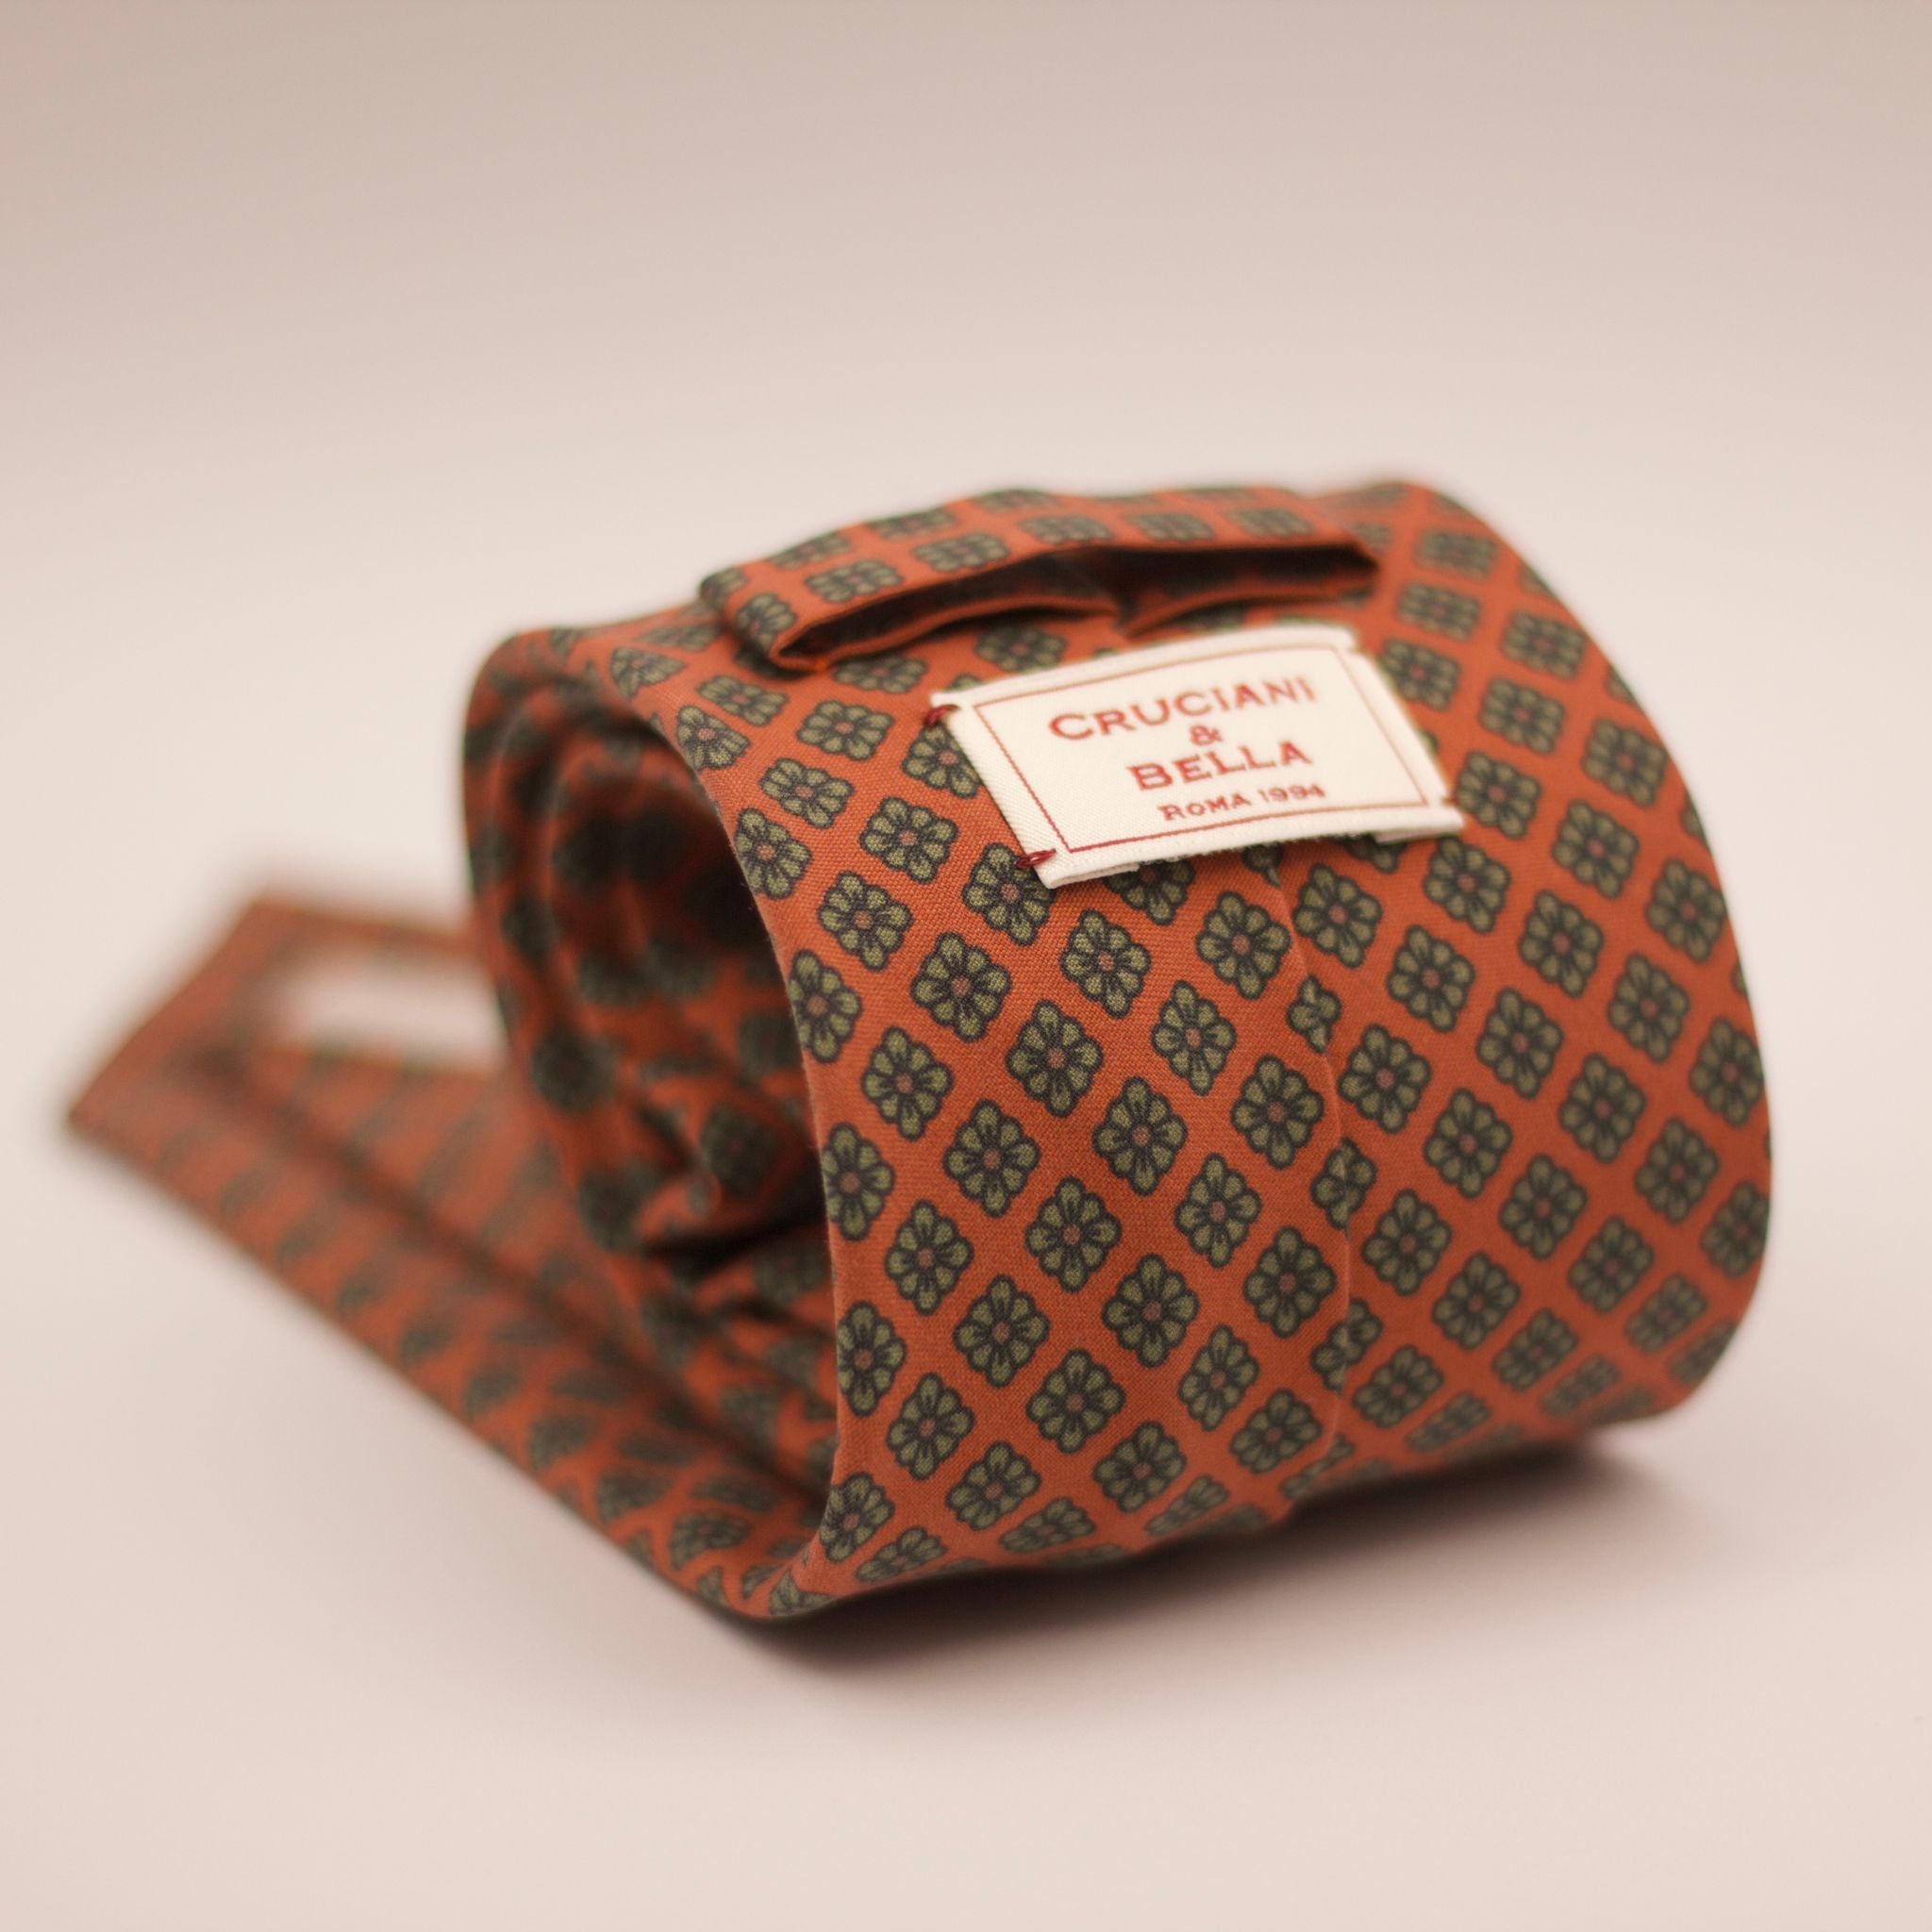 Cruciani & Bella  100% Printed Madder Silk  Italian fabric  Unlined tie Orange, Green floral  motif  8 cm x 150 cm #5946